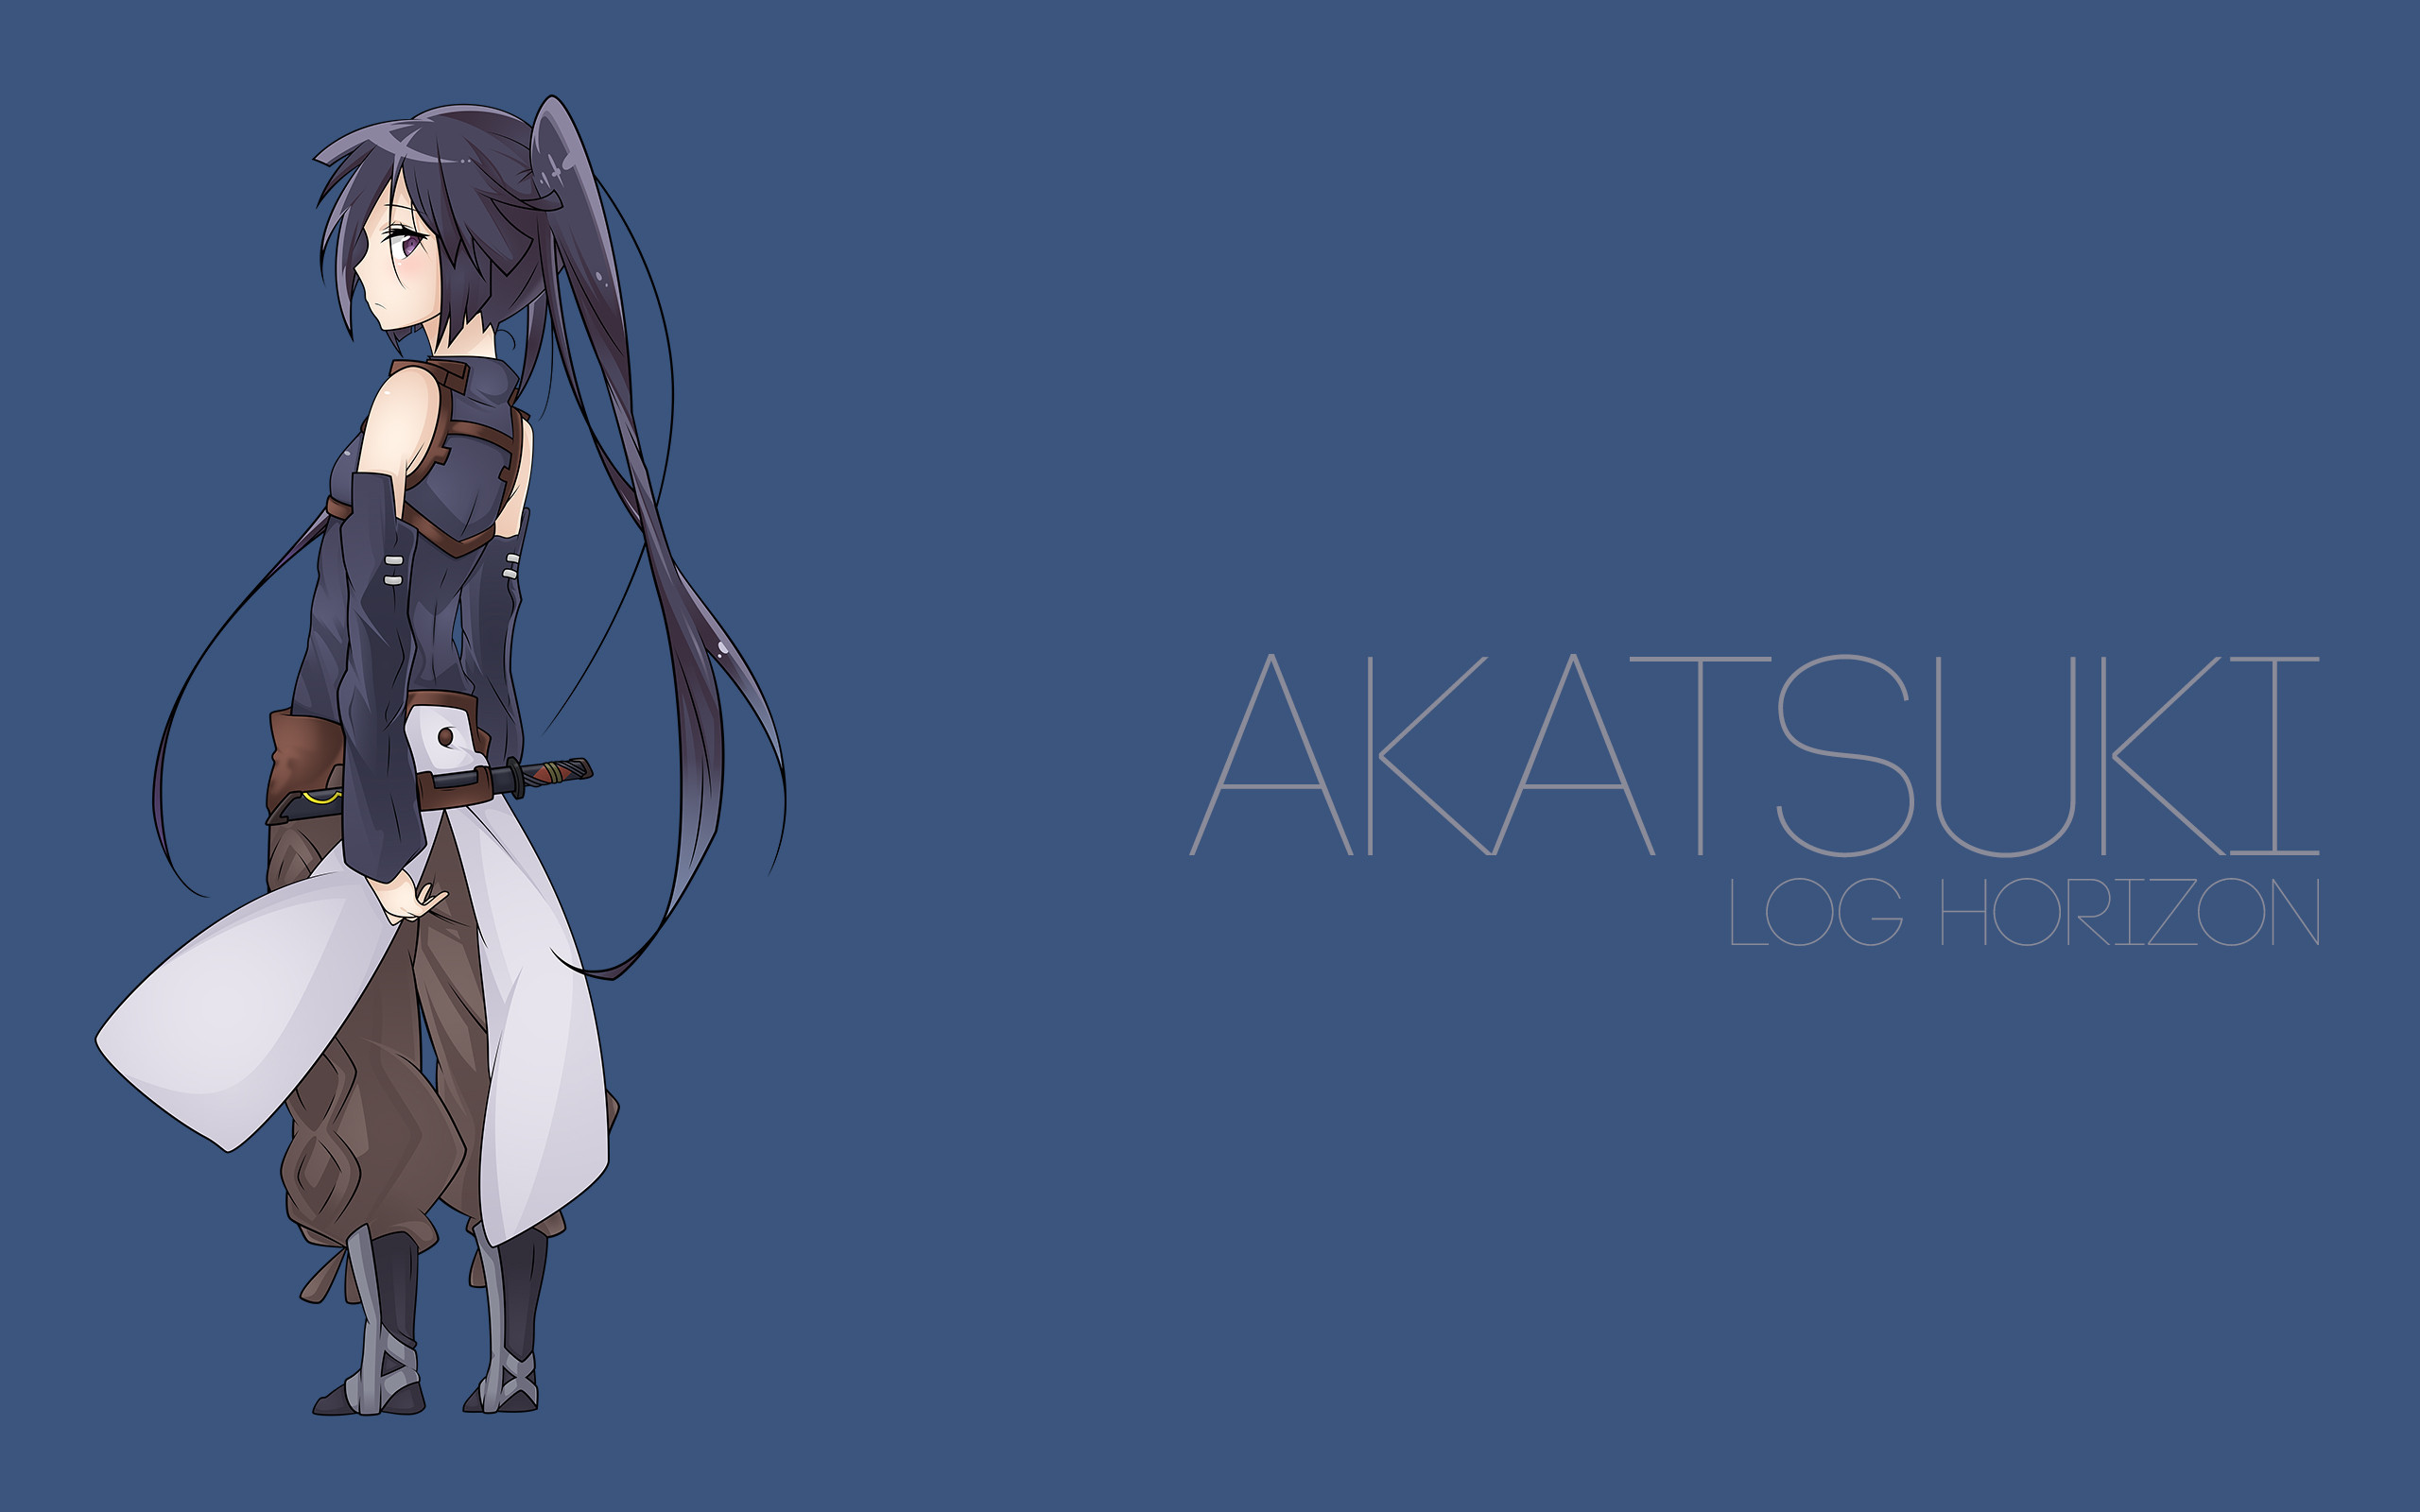 2560x1600 Akatsuki - Log Horizon [ - 1440p in comments] ...